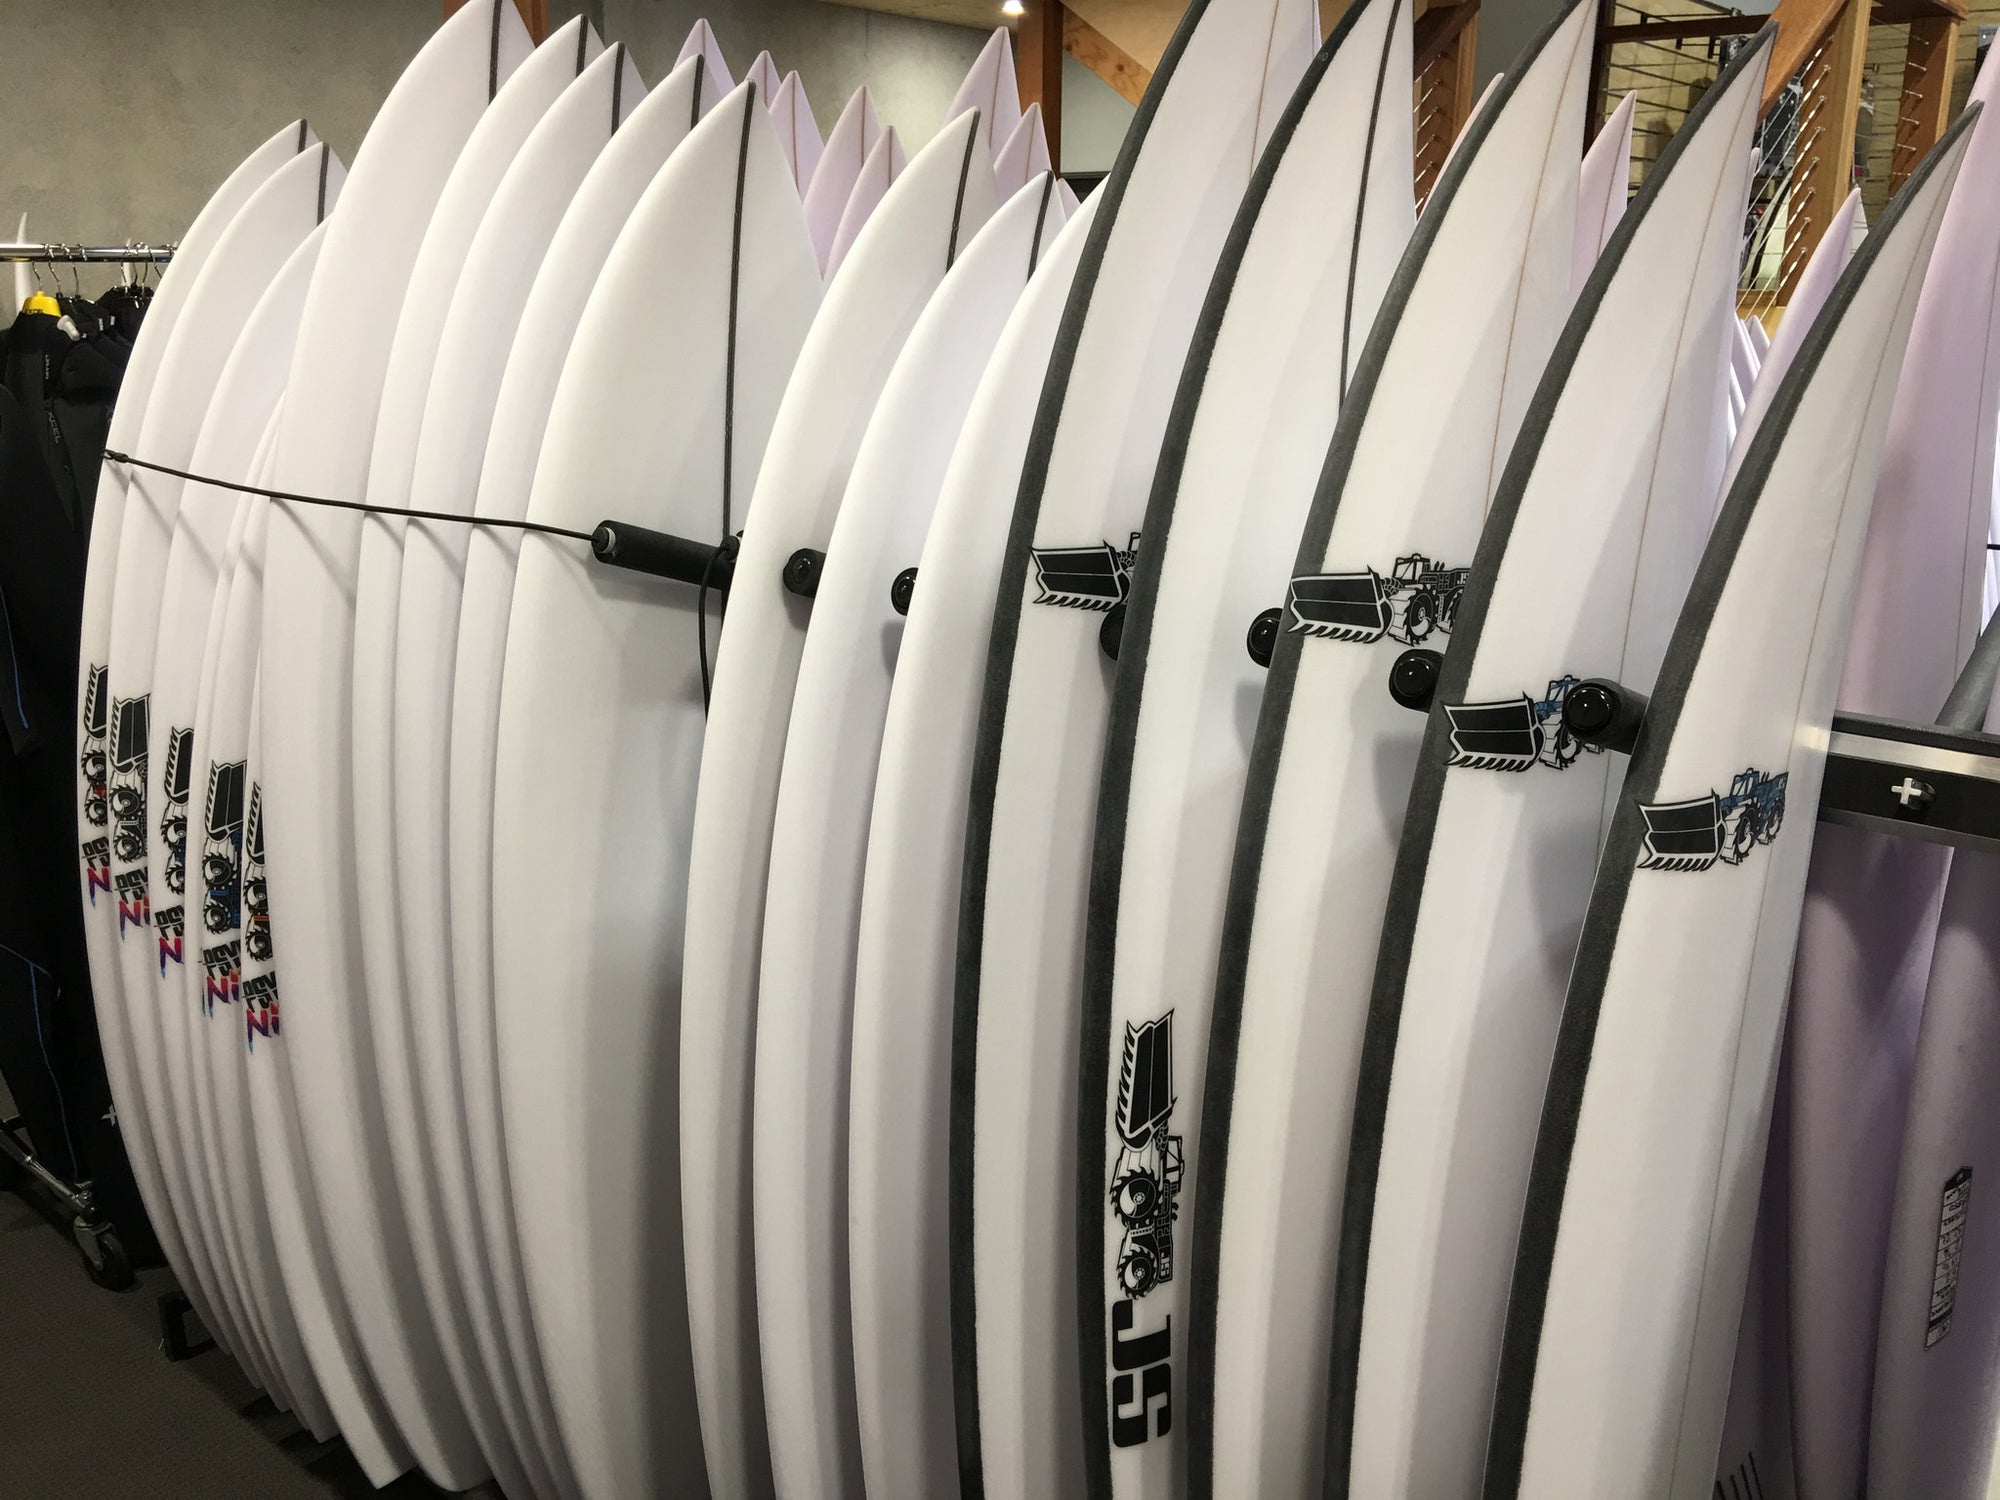 JS Surfboards